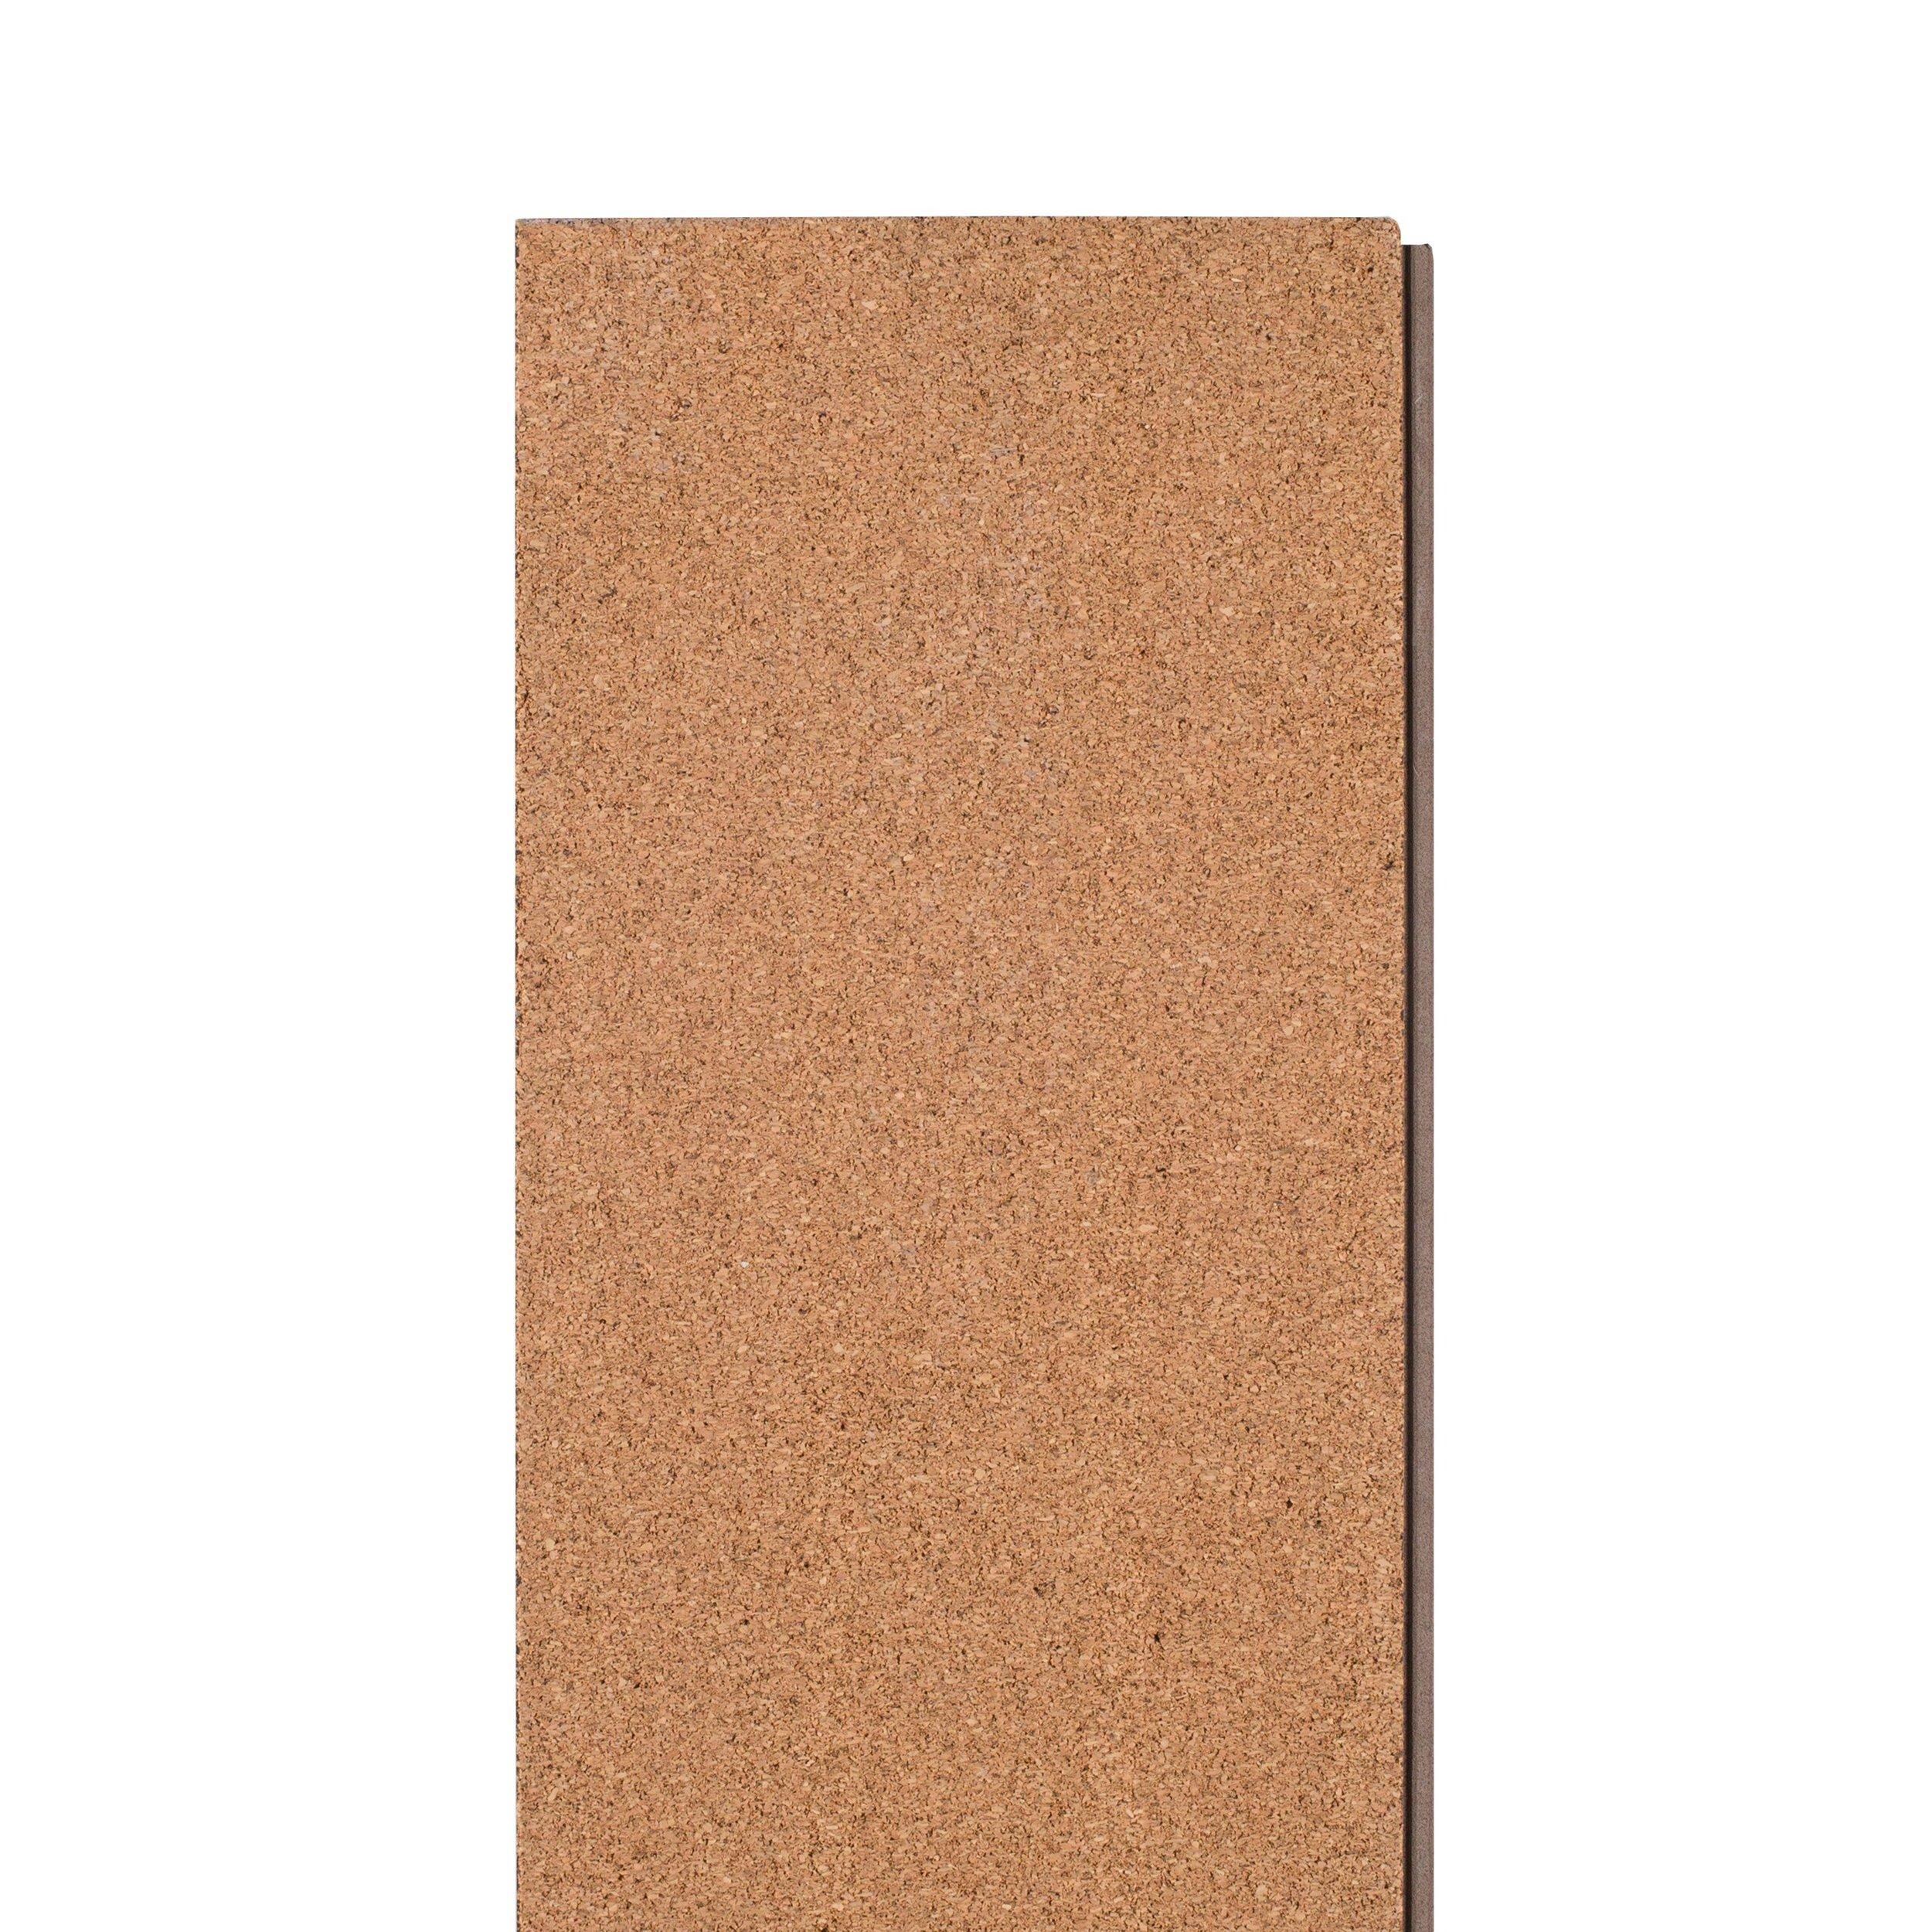 Greythorne Rigid Core Luxury Vinyl Plank - Cork Back